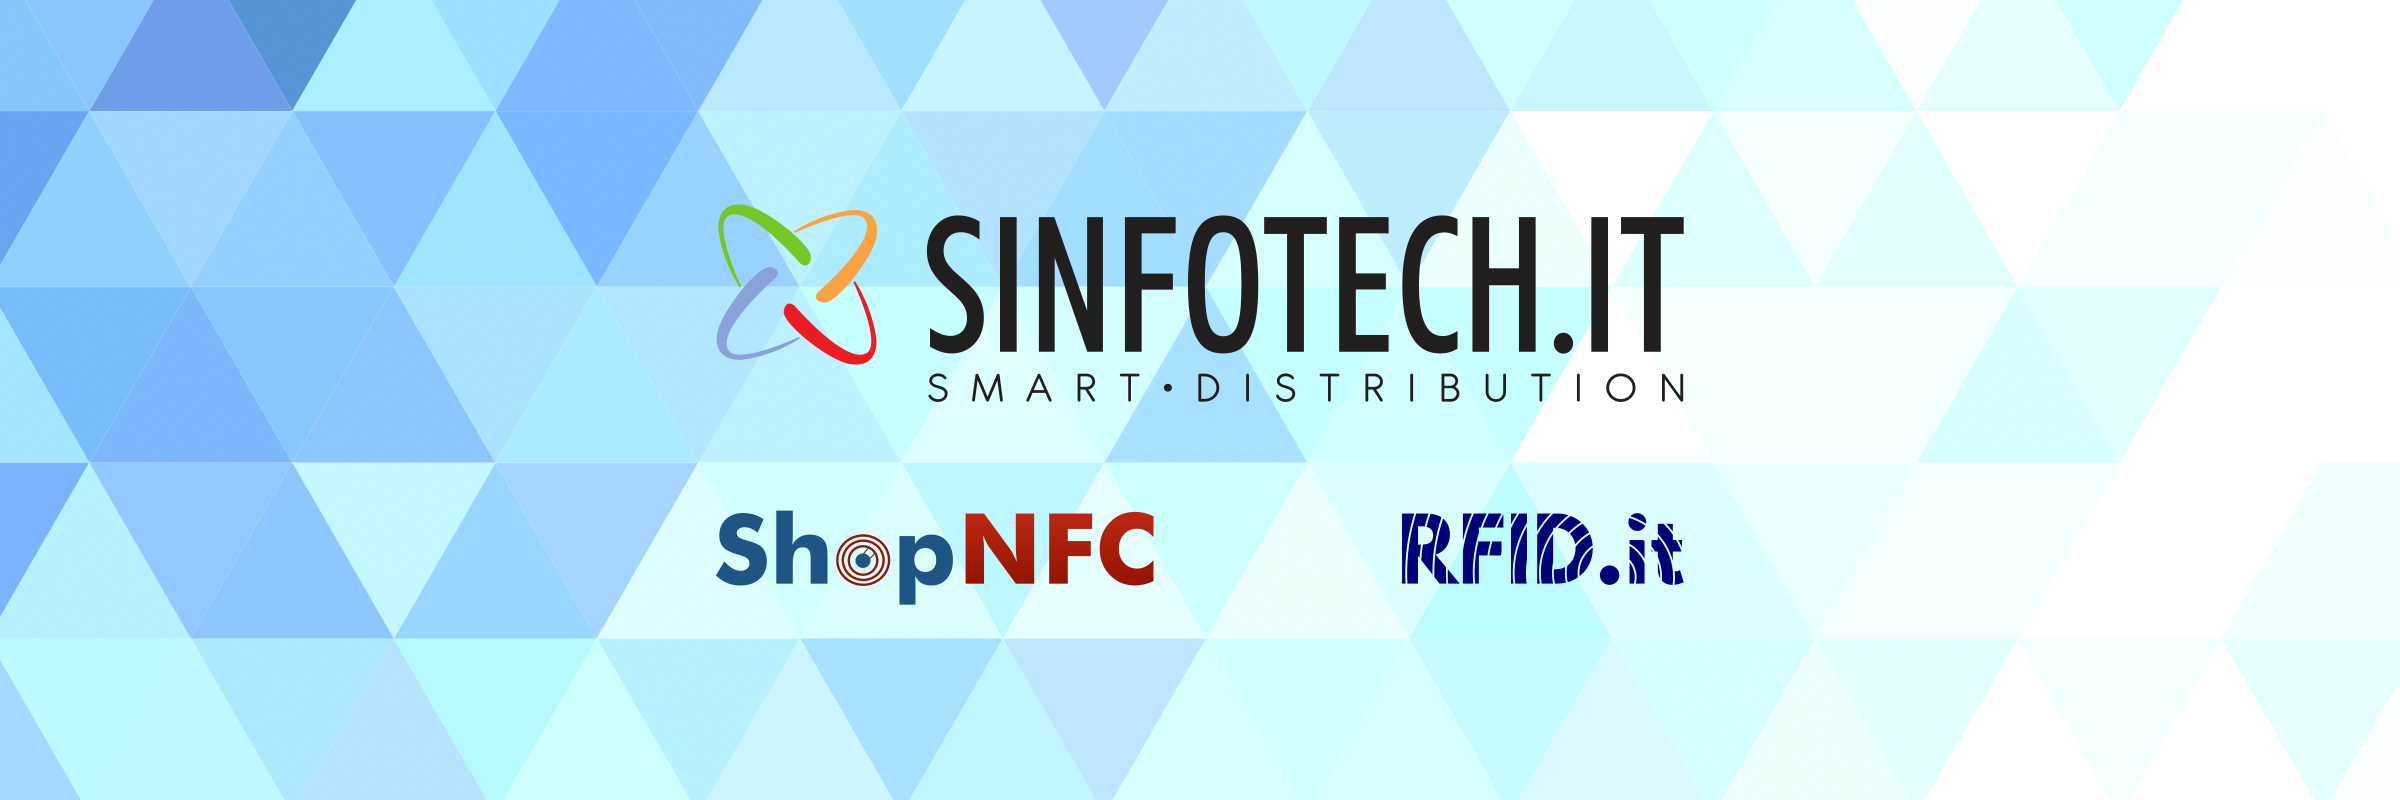 Sinfotech.it | Shop NFC | RFID.it